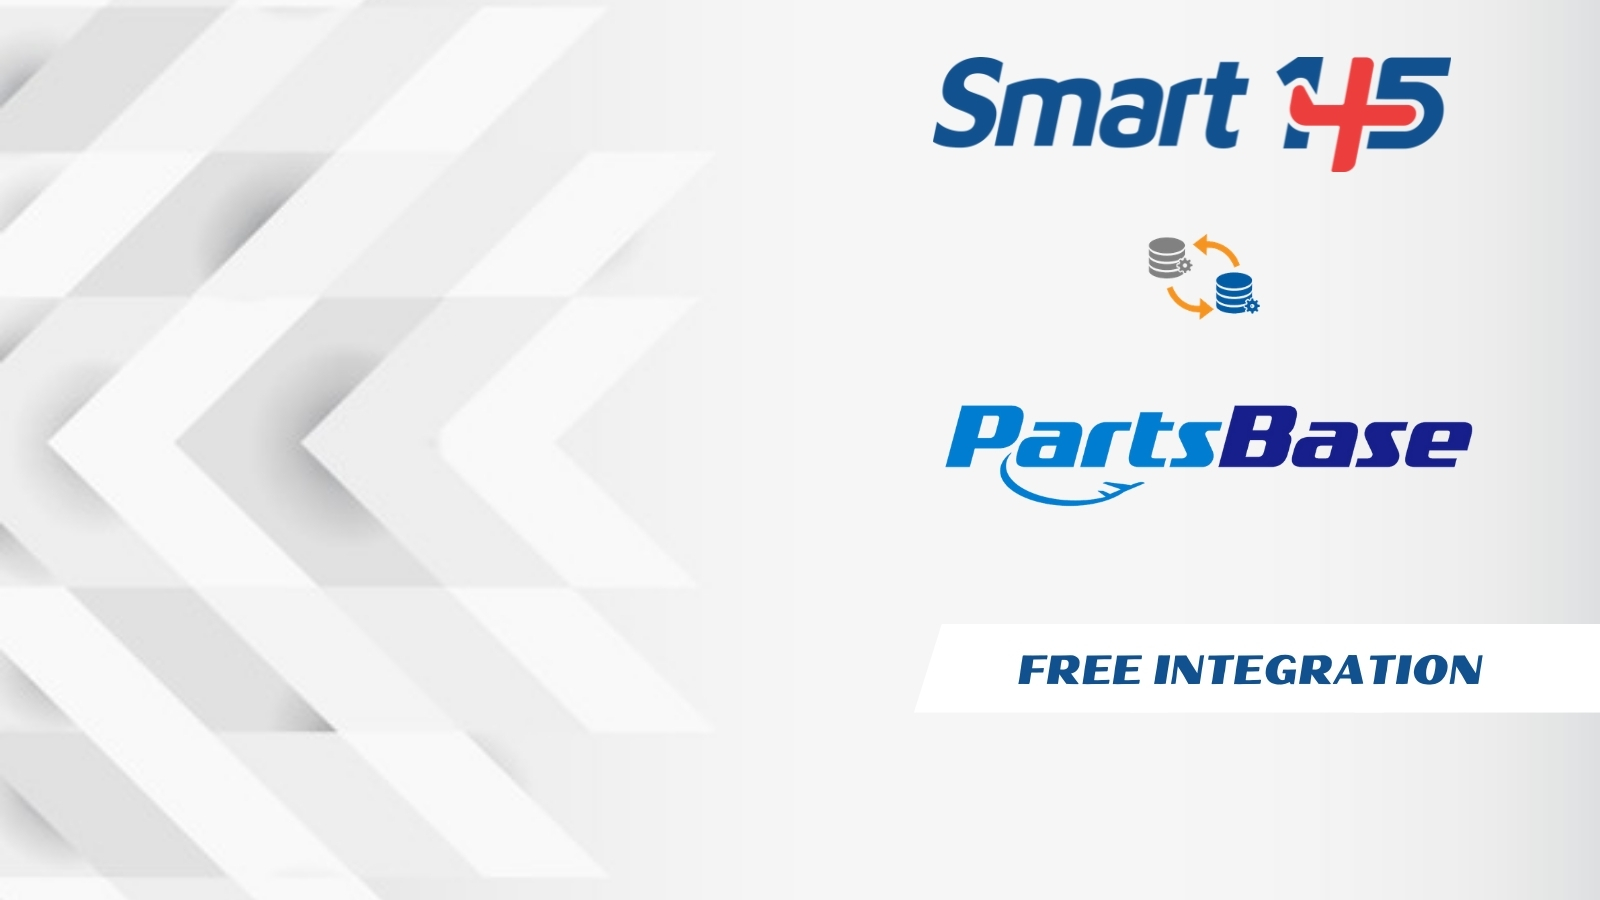 Smart 145 Announces Partnership with PartsBase